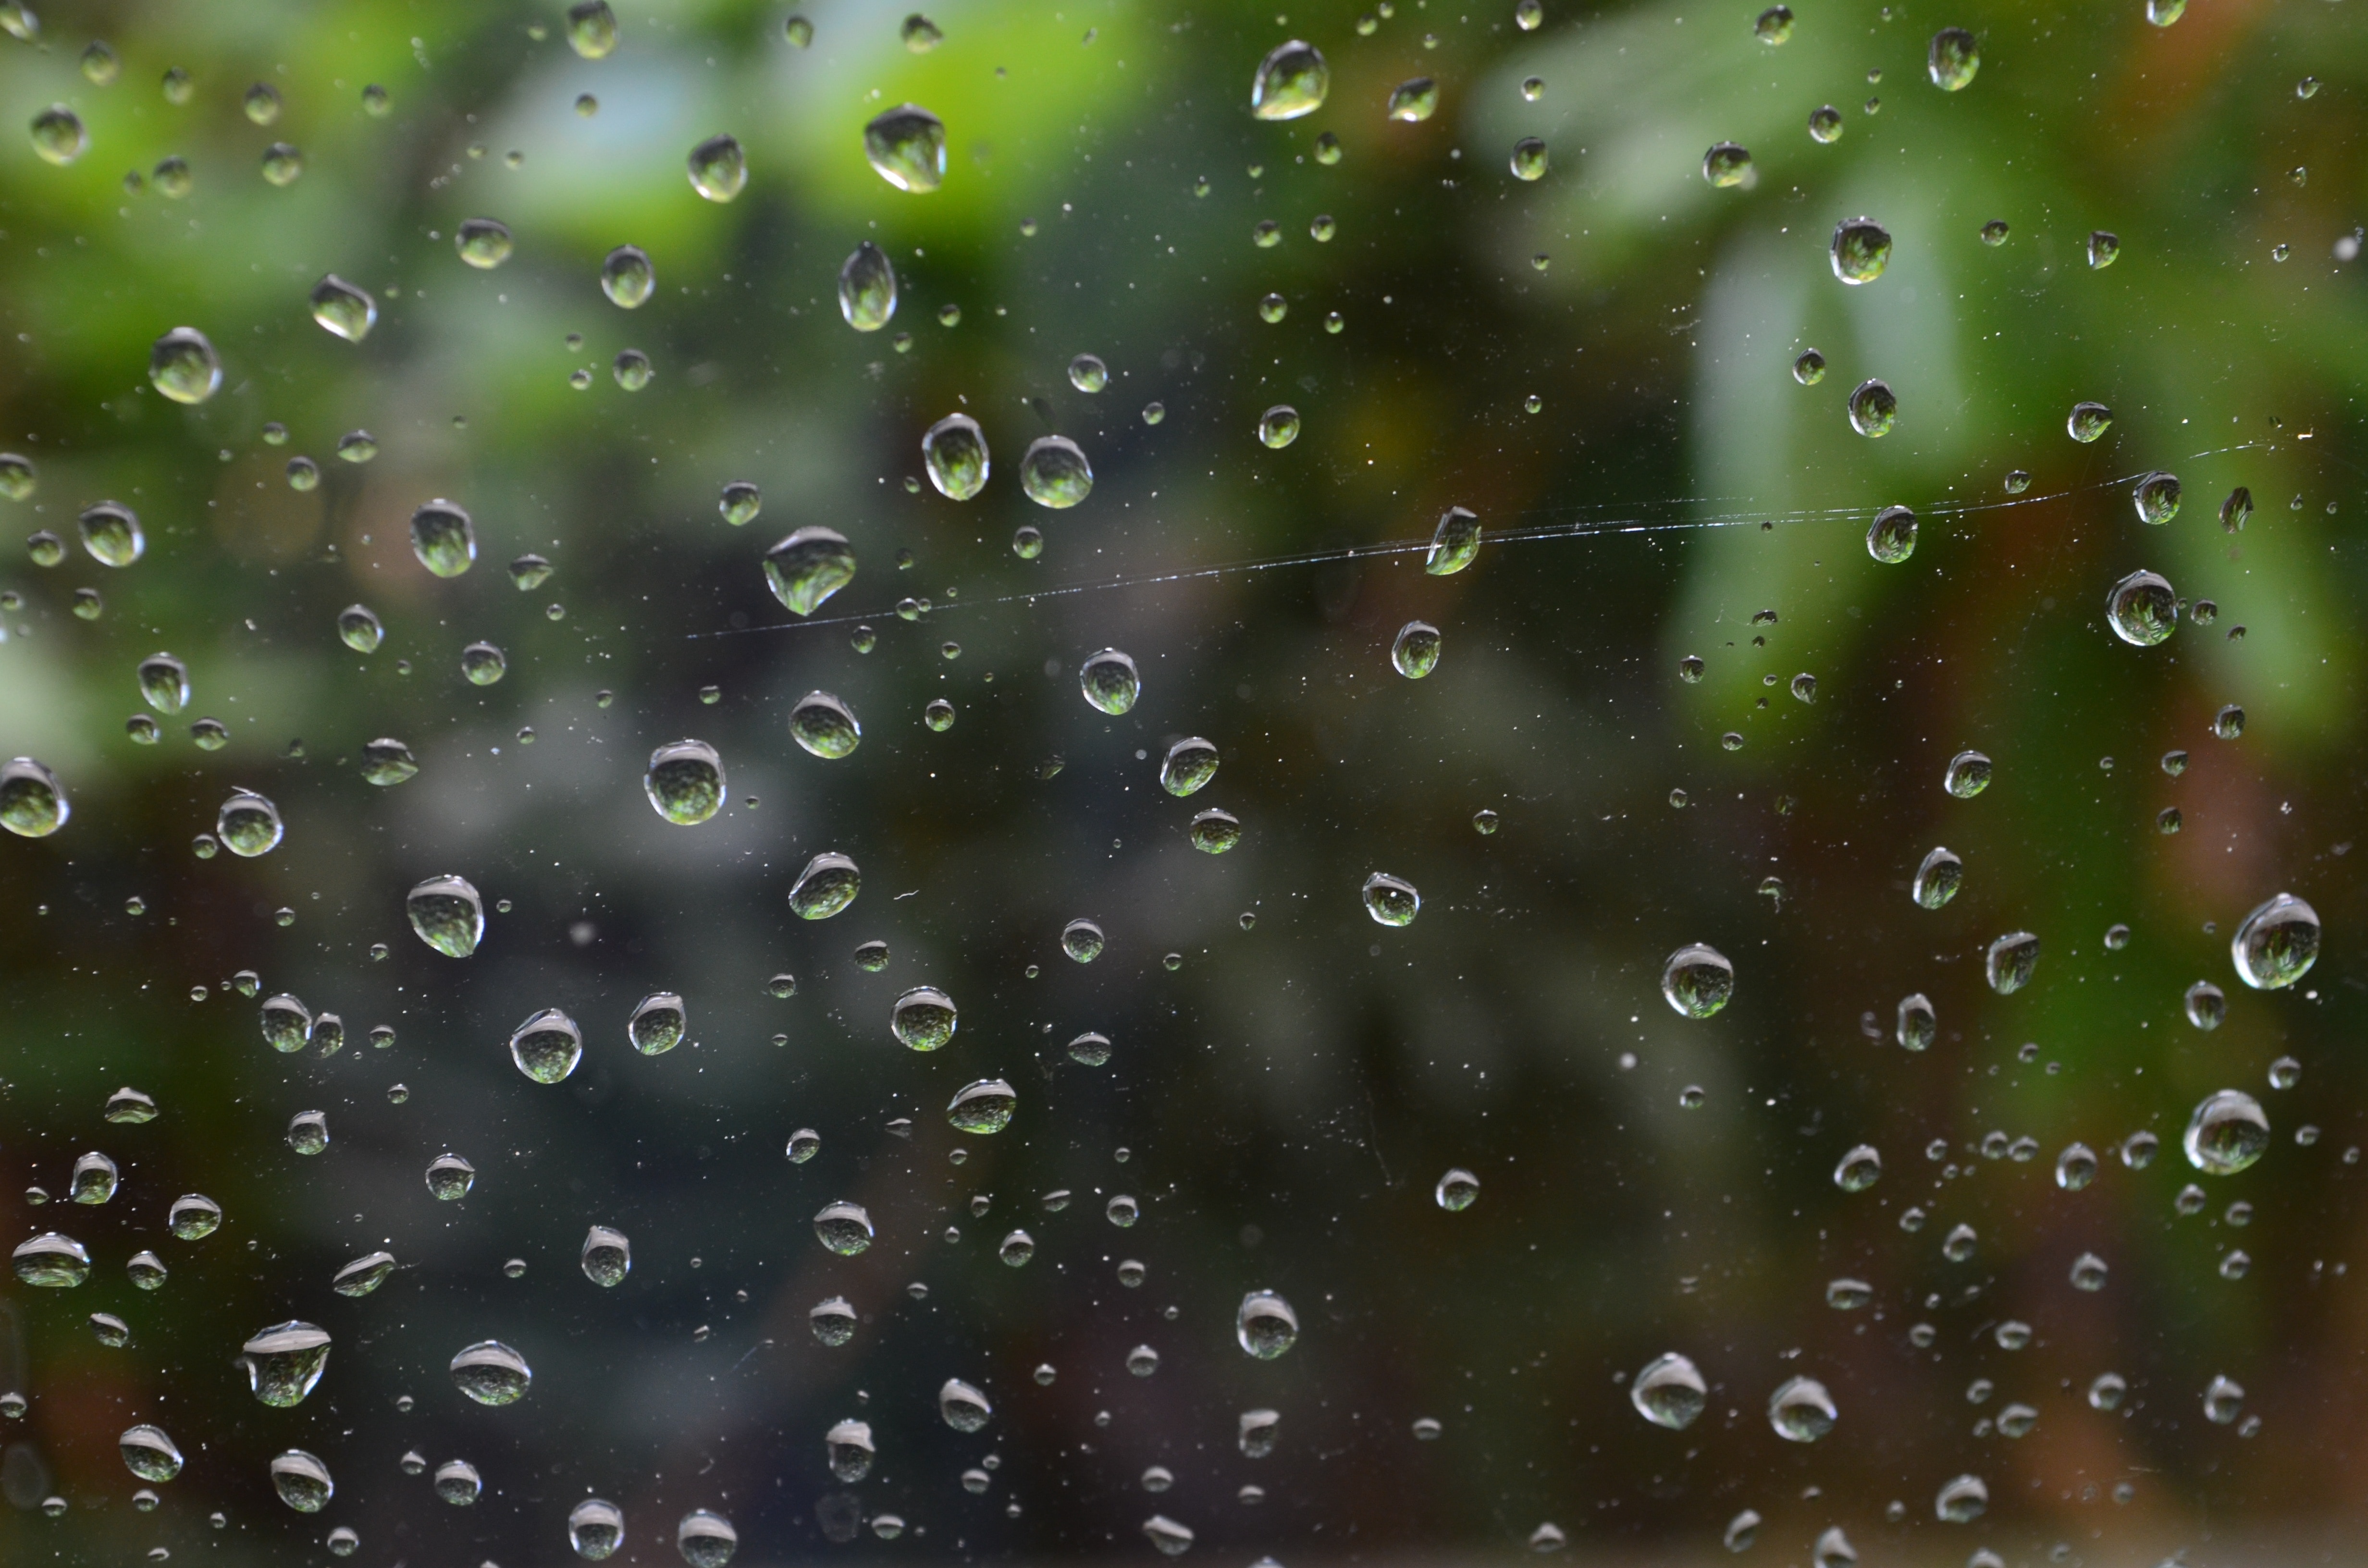 Картинка капли дождя. Капли дождя. Капли на стекле. Капли дождя на окне. Окно с каплями дождя.